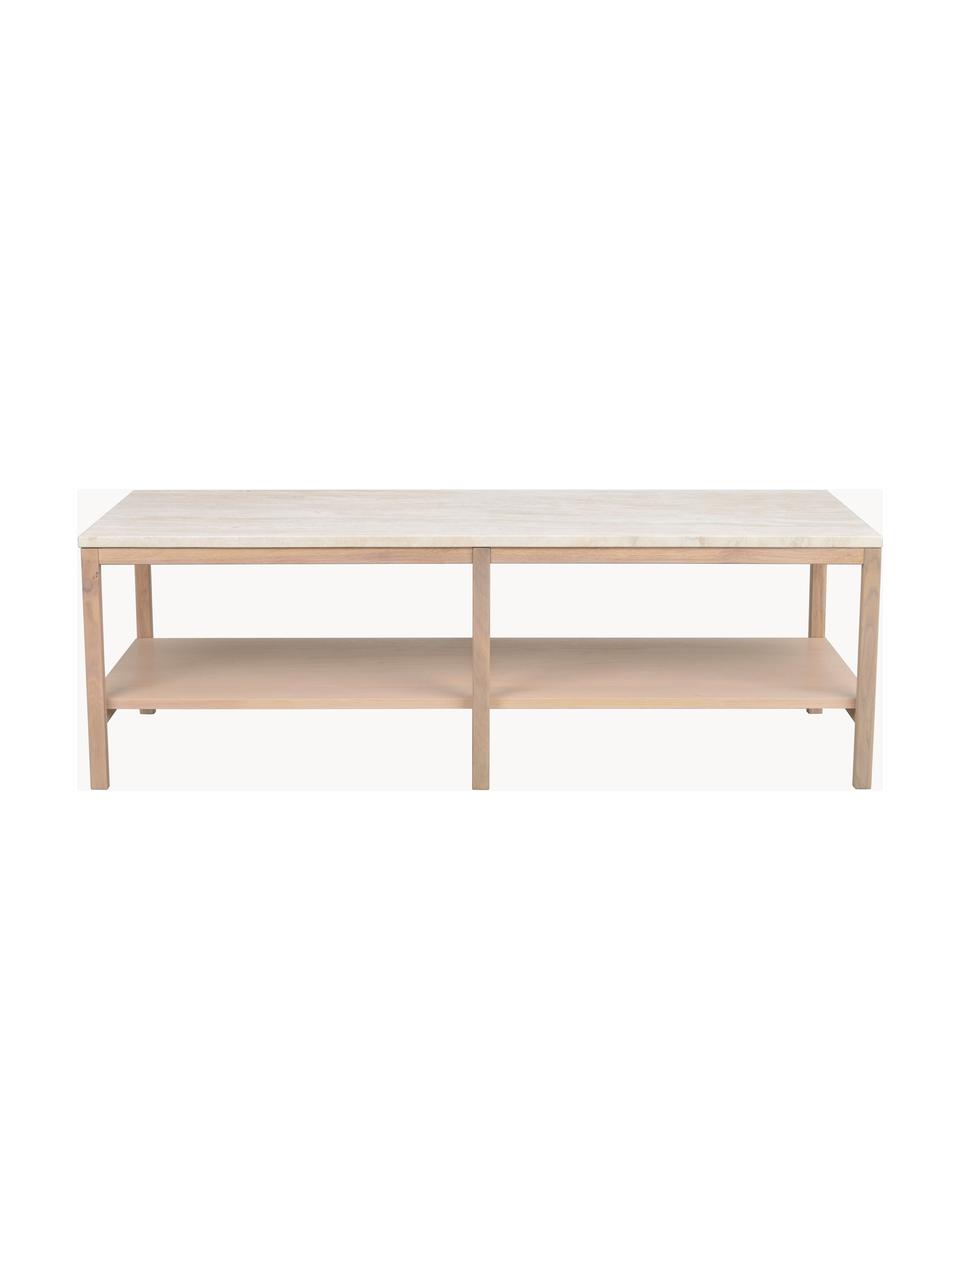 Grande table basse Orwel, Travertin beige clair, chêne clair, larg. 140 x haut. 60 cm